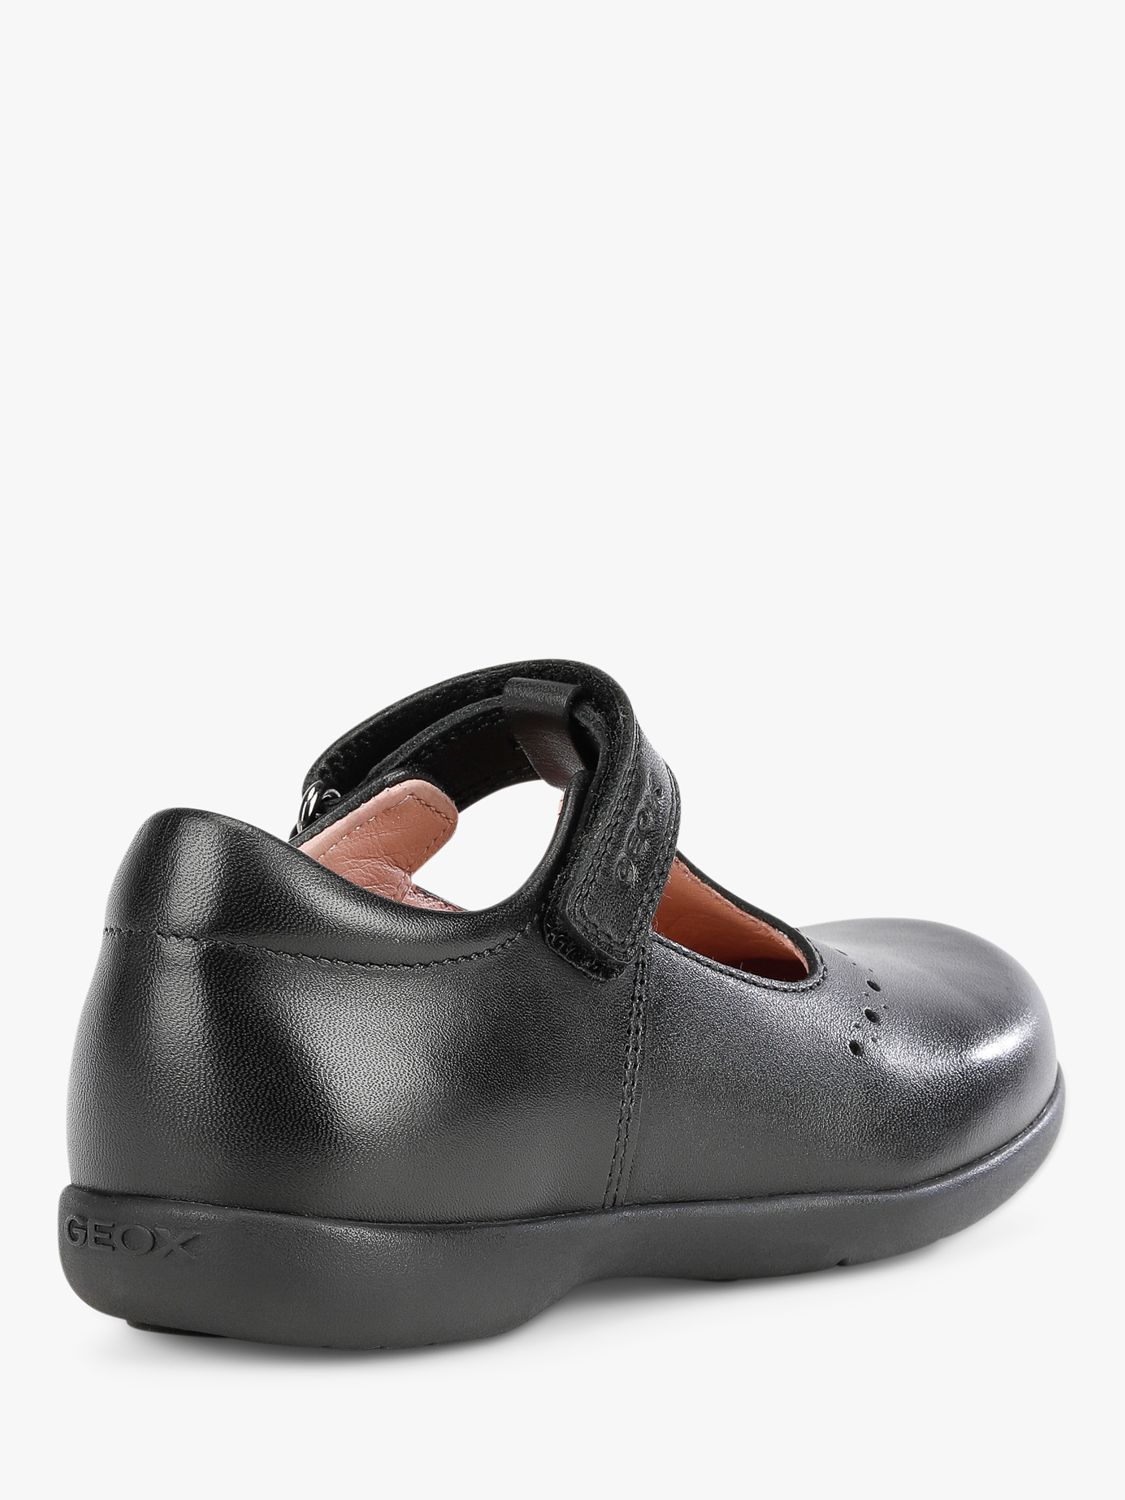 Geox Kids' Naimara Leather School Shoes, Black, 30